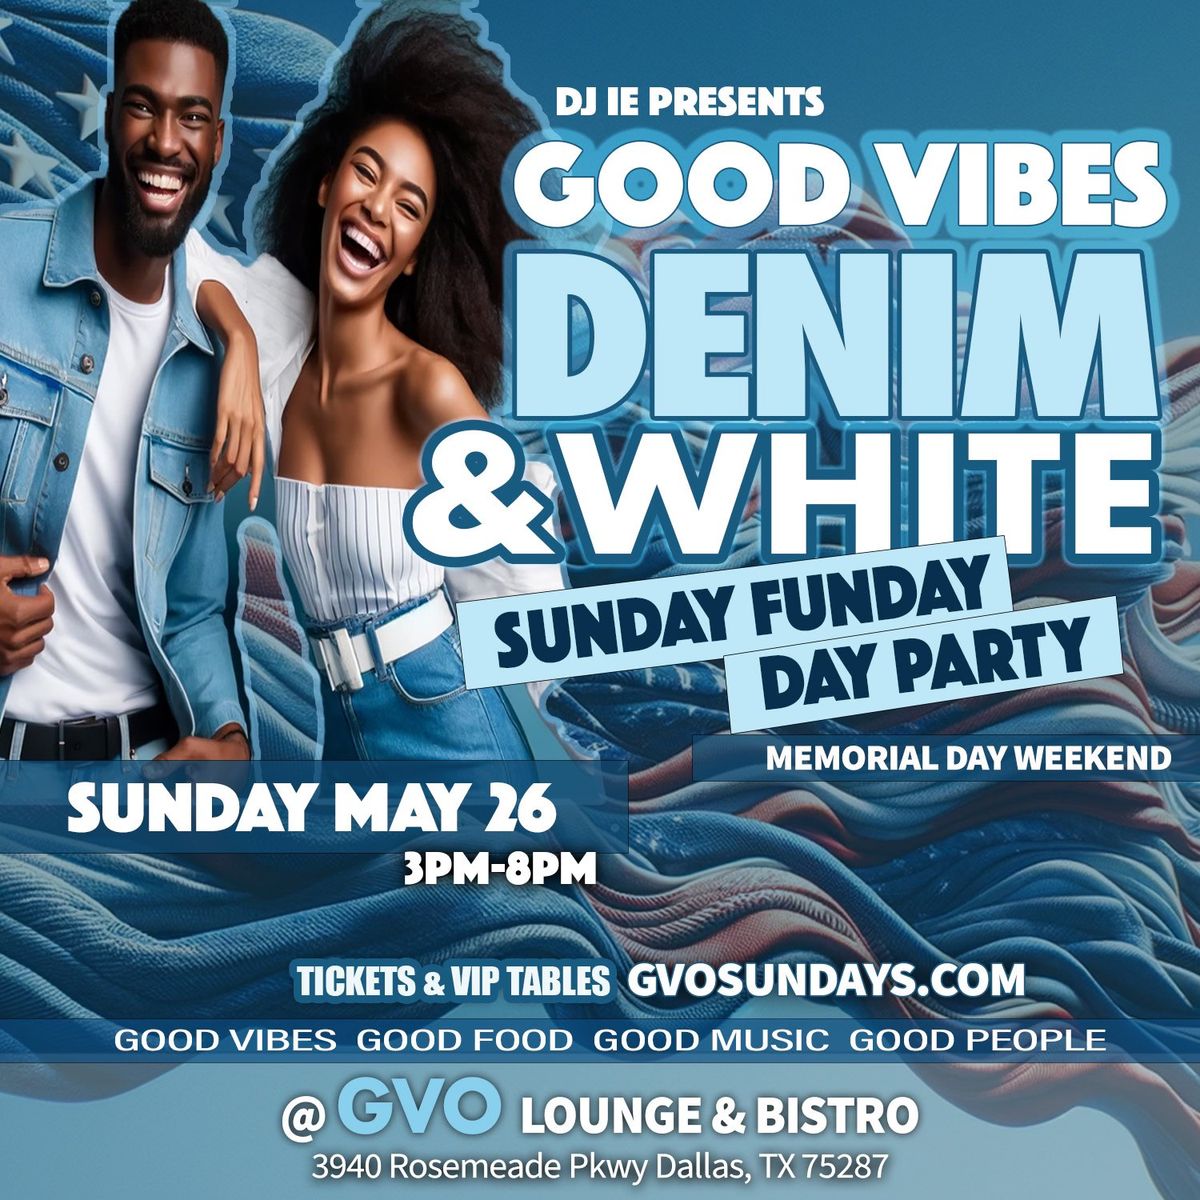 Good Vibes: Denim & White SunDay FunDay at GVO Lounge & Bistro